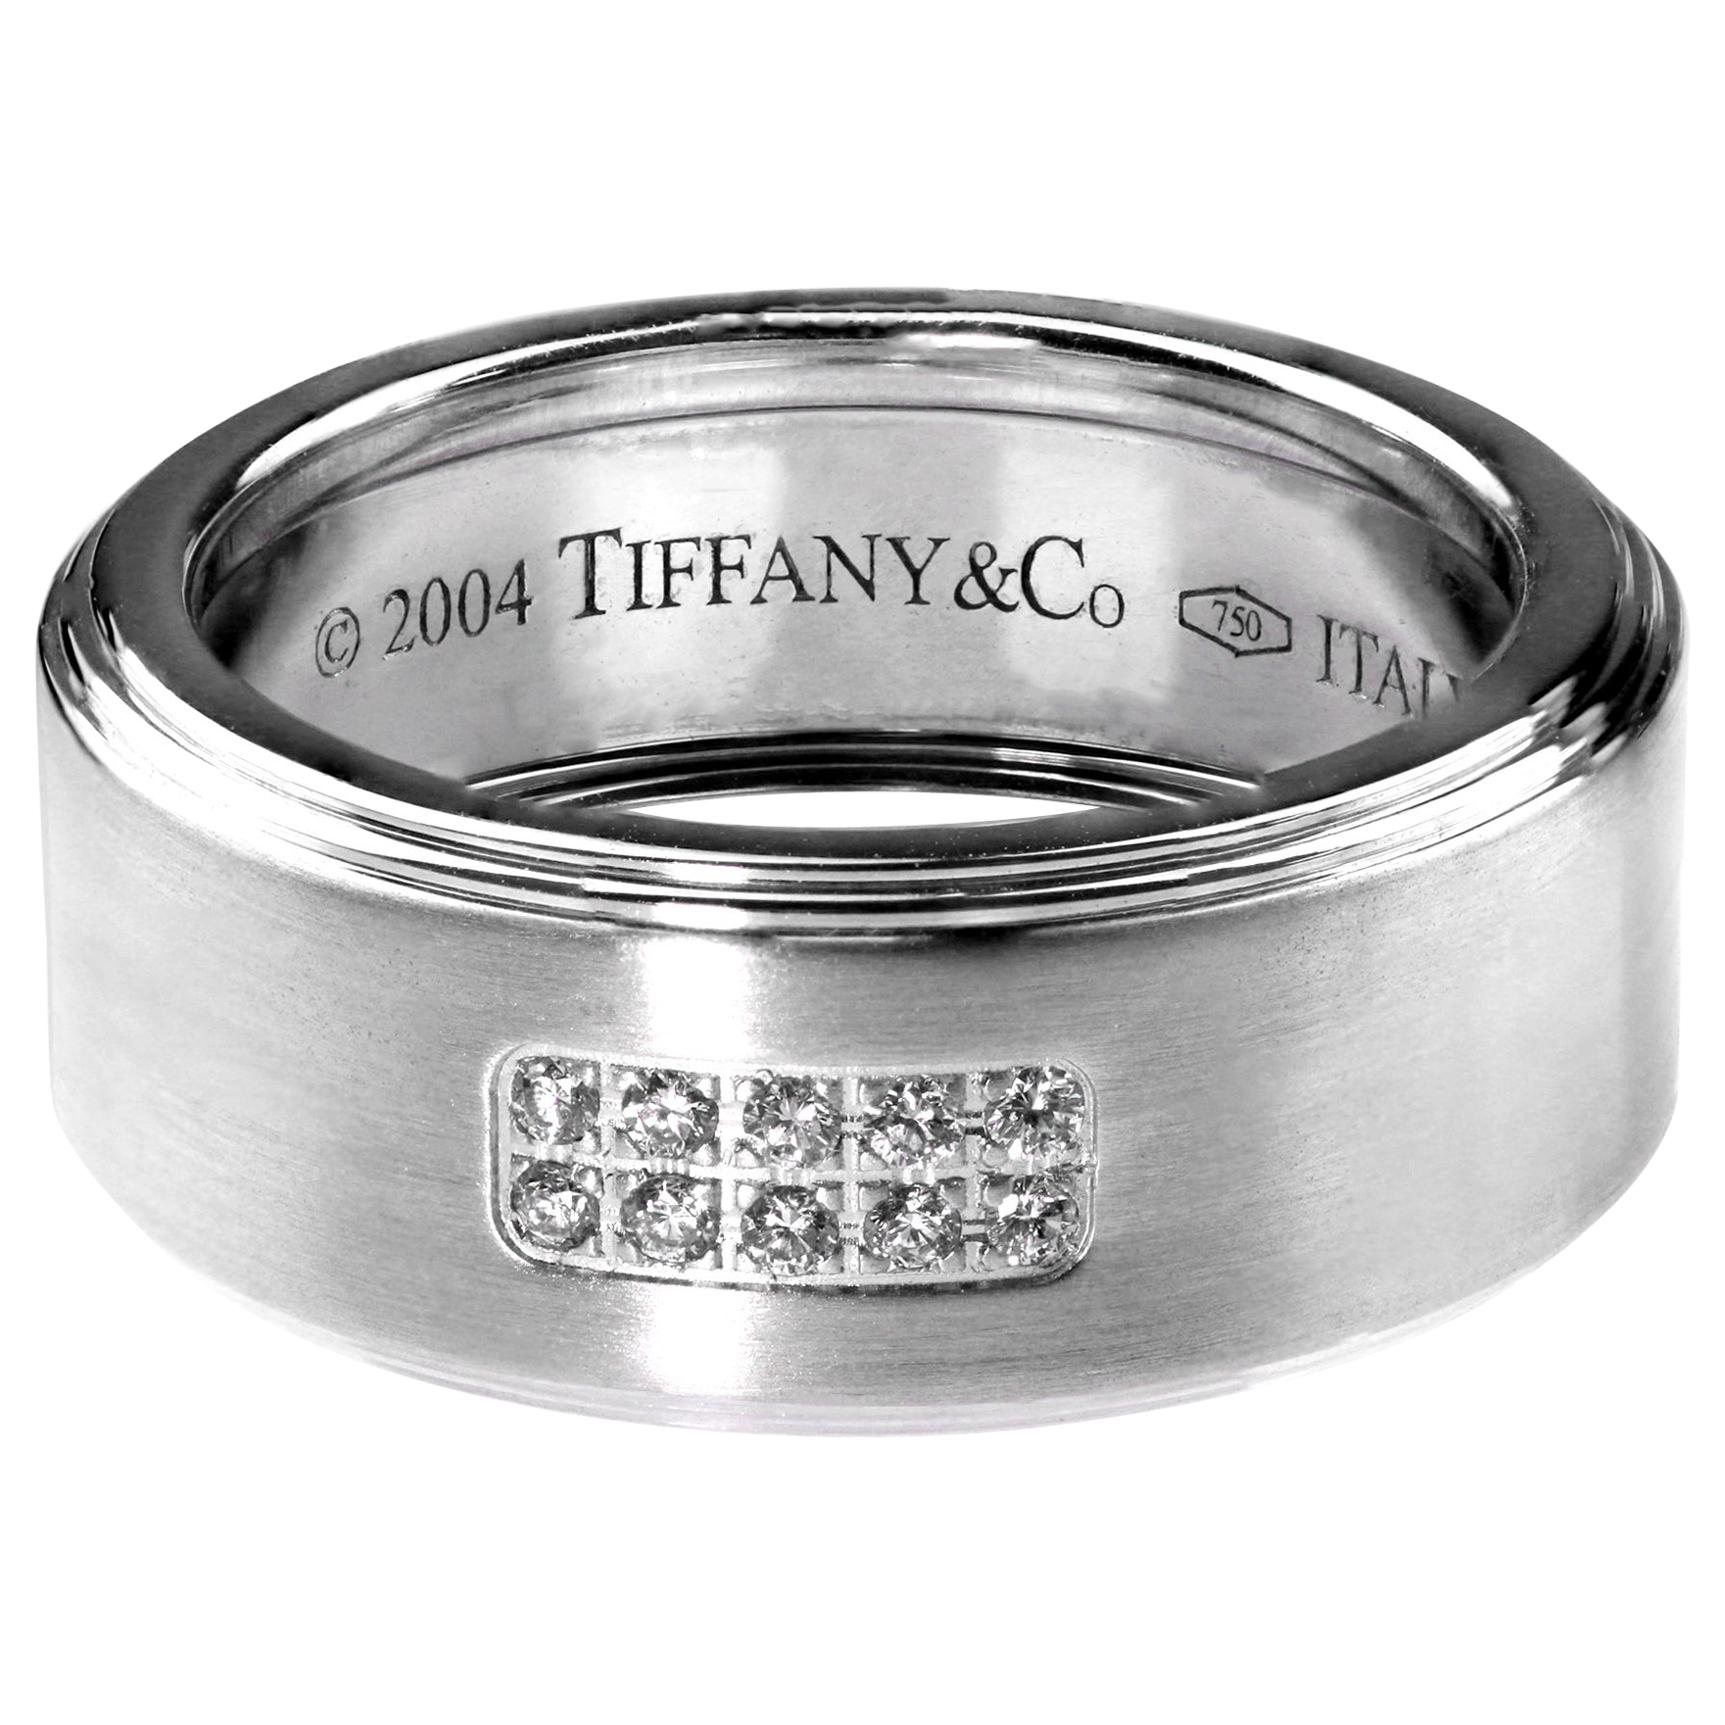 Tiffany & Co Mens Platinum Milgrain Wedding Band Ring 6mm Size 7.5 Retired  Piece | eBay